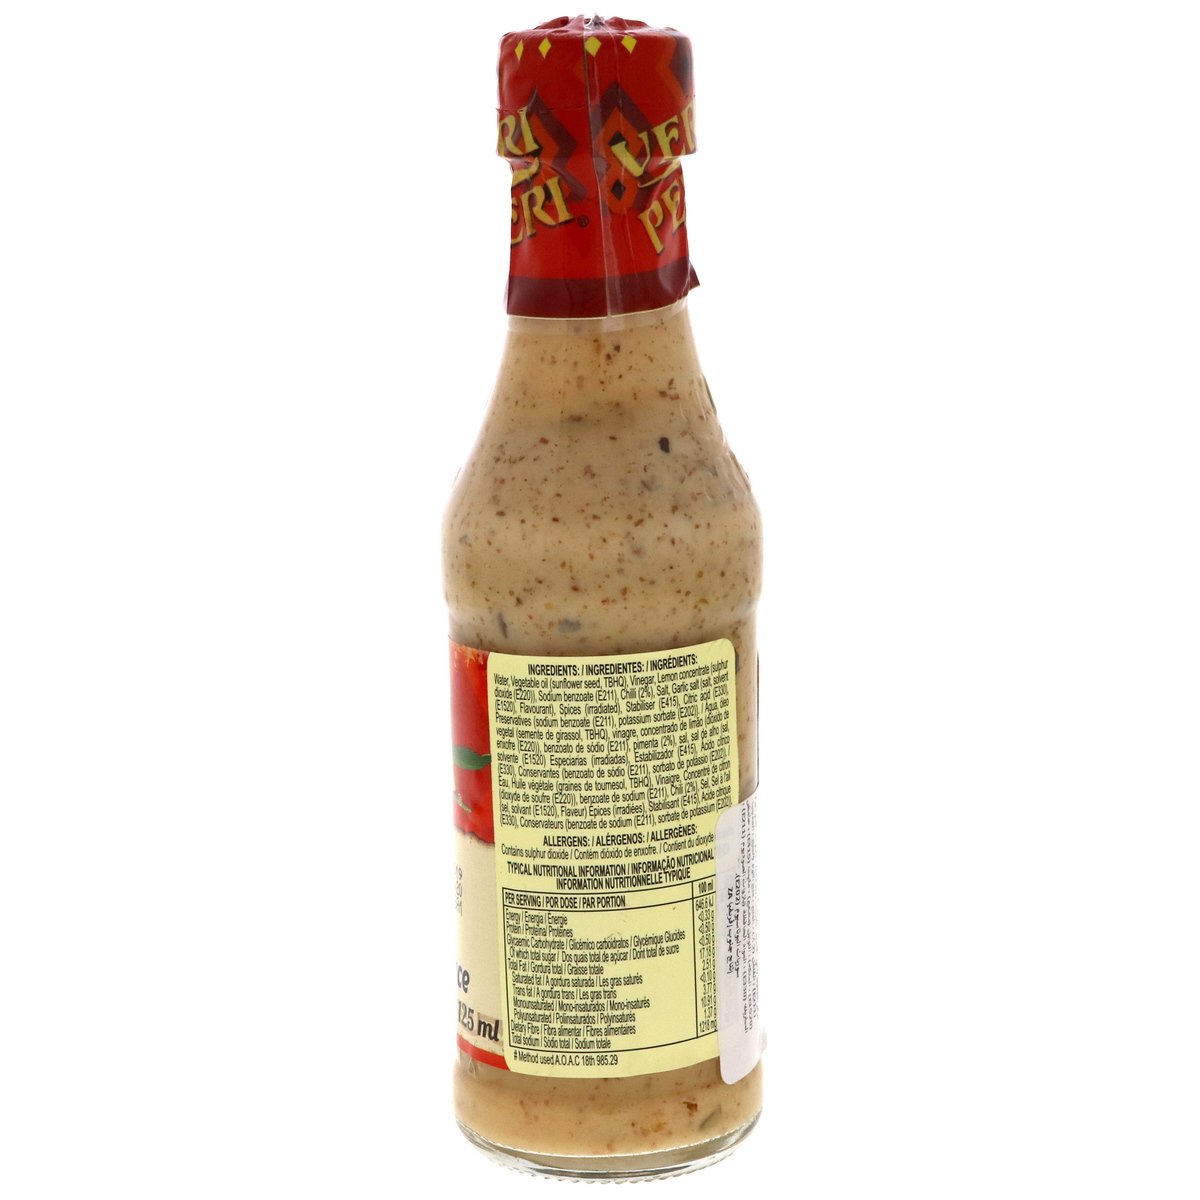 Veri Peri Hot African Sauce  125 ml